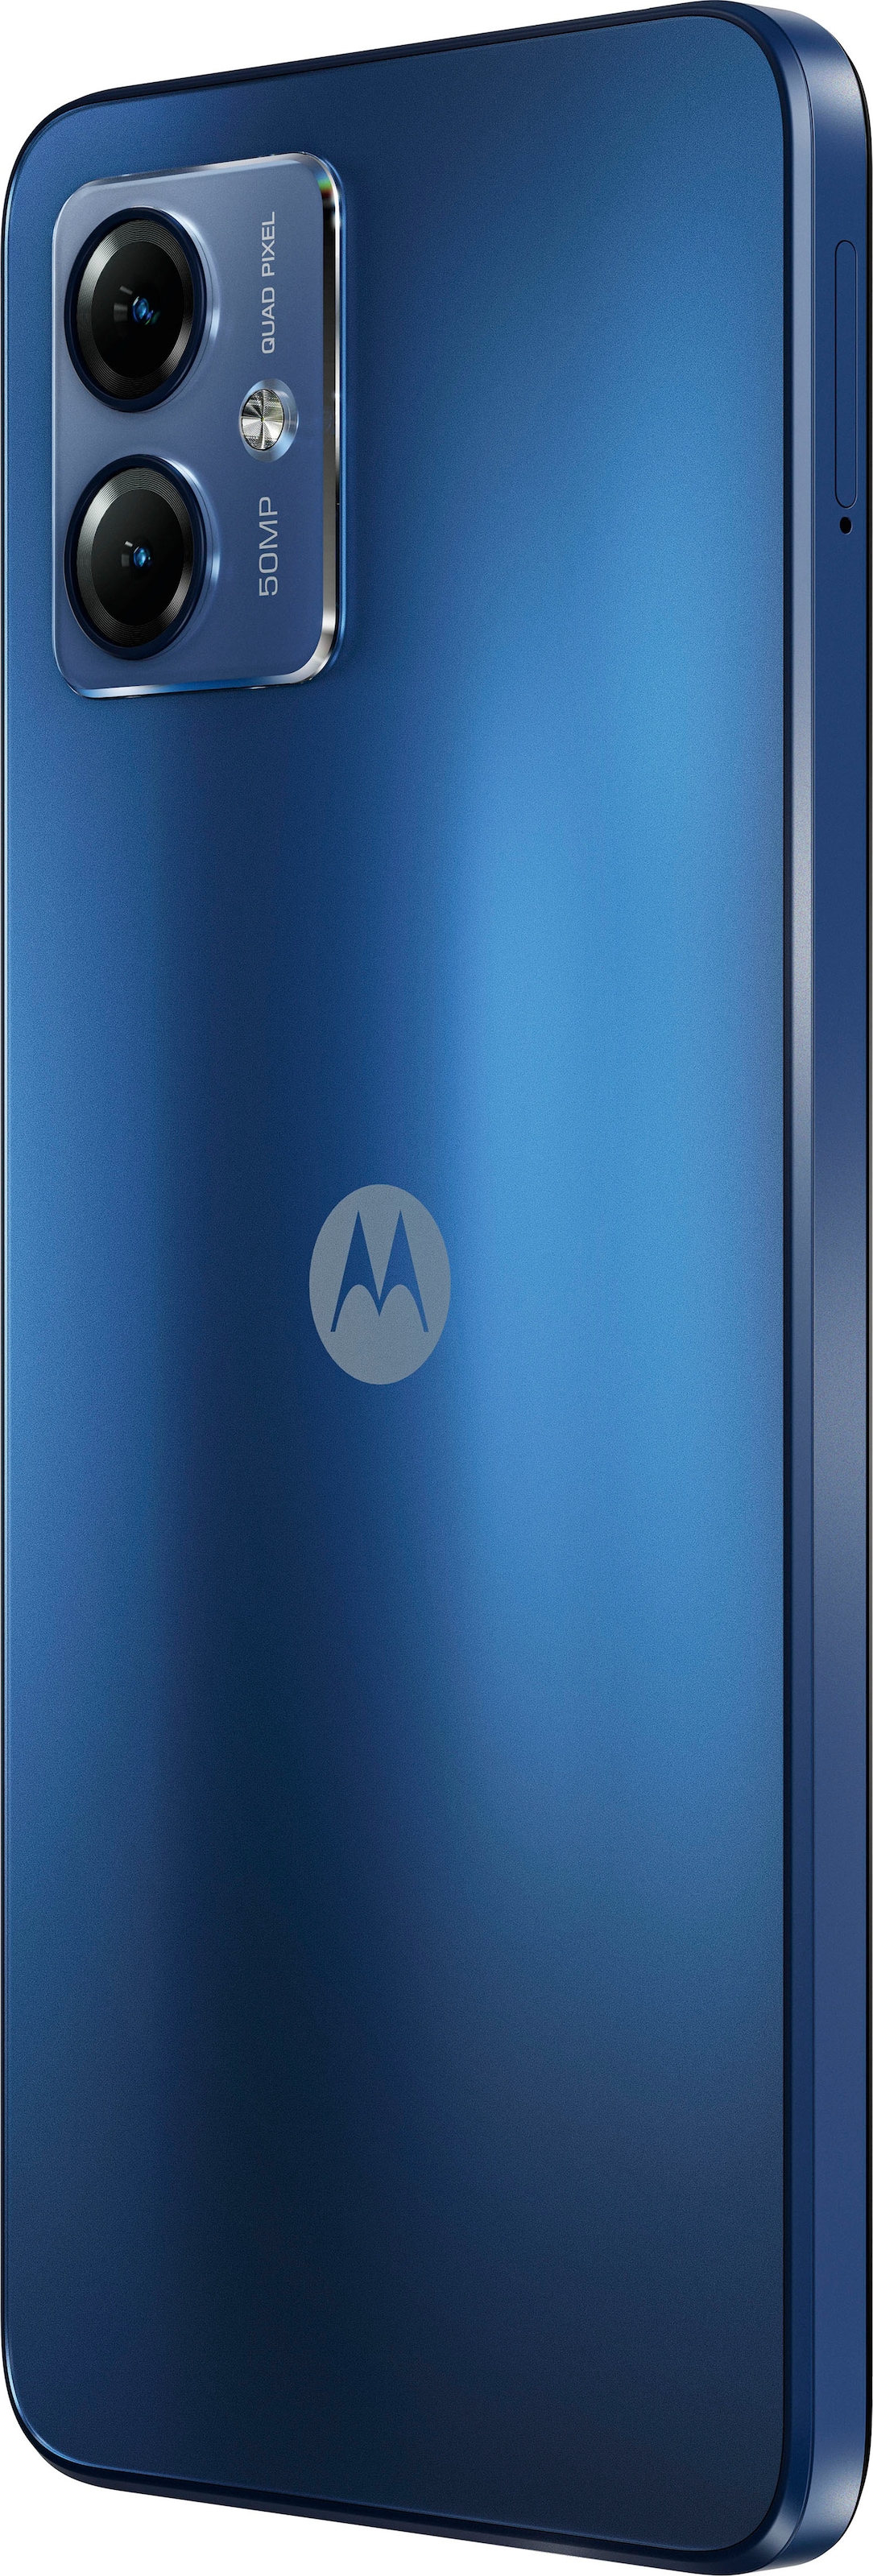 Motorola Smartphone »moto g14«, Sky Blue, 16,51 cm/6,5 Zoll, 128 GB Speicherplatz, 50 MP Kamera